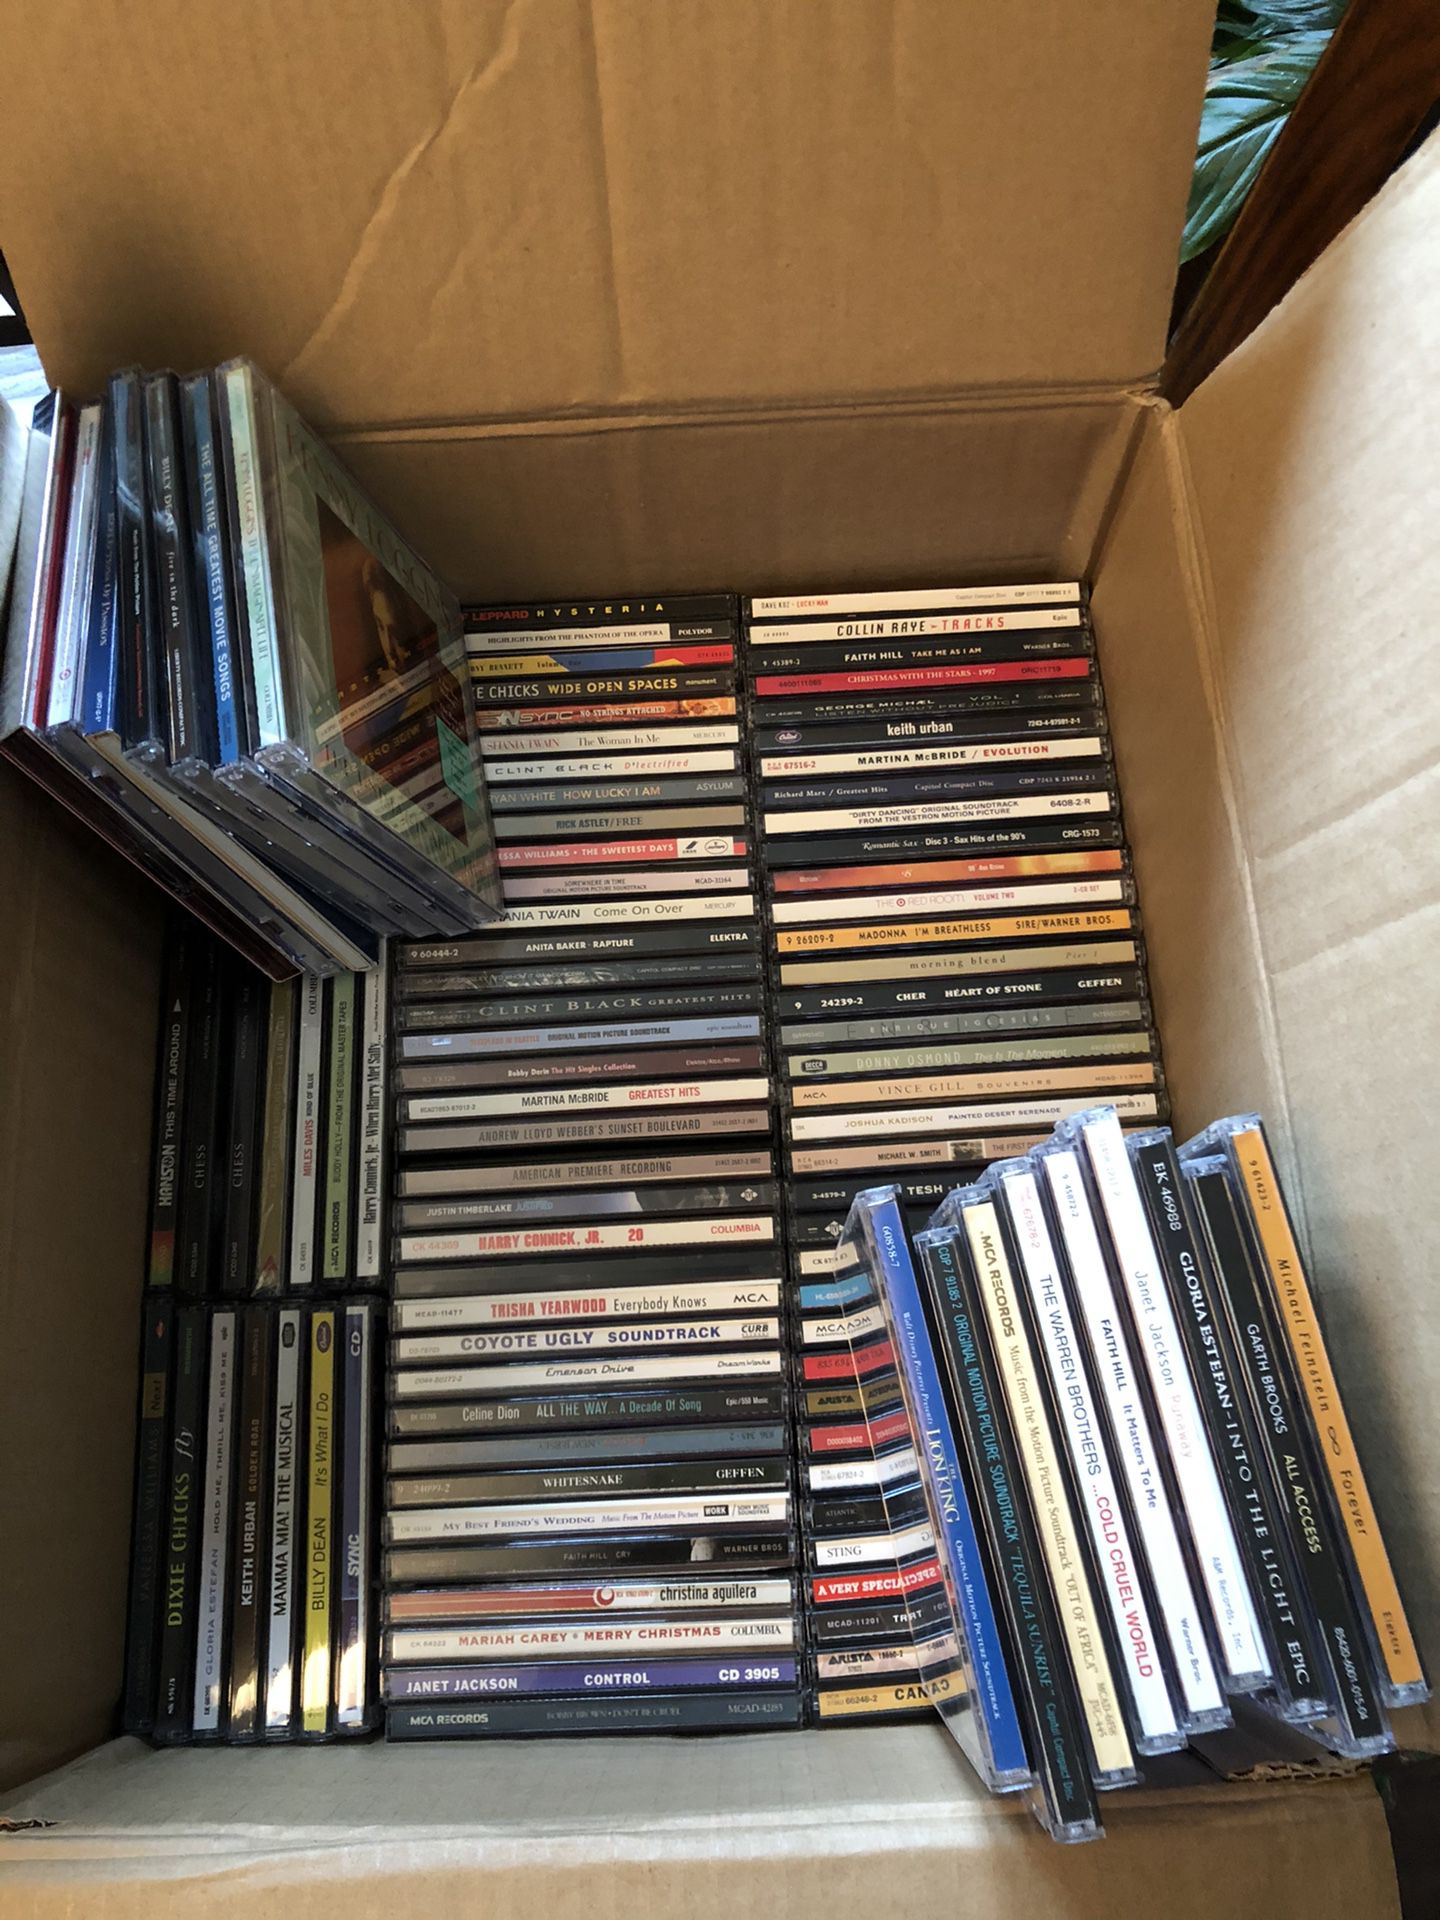 Box of Music! 100 cds! The whole box!